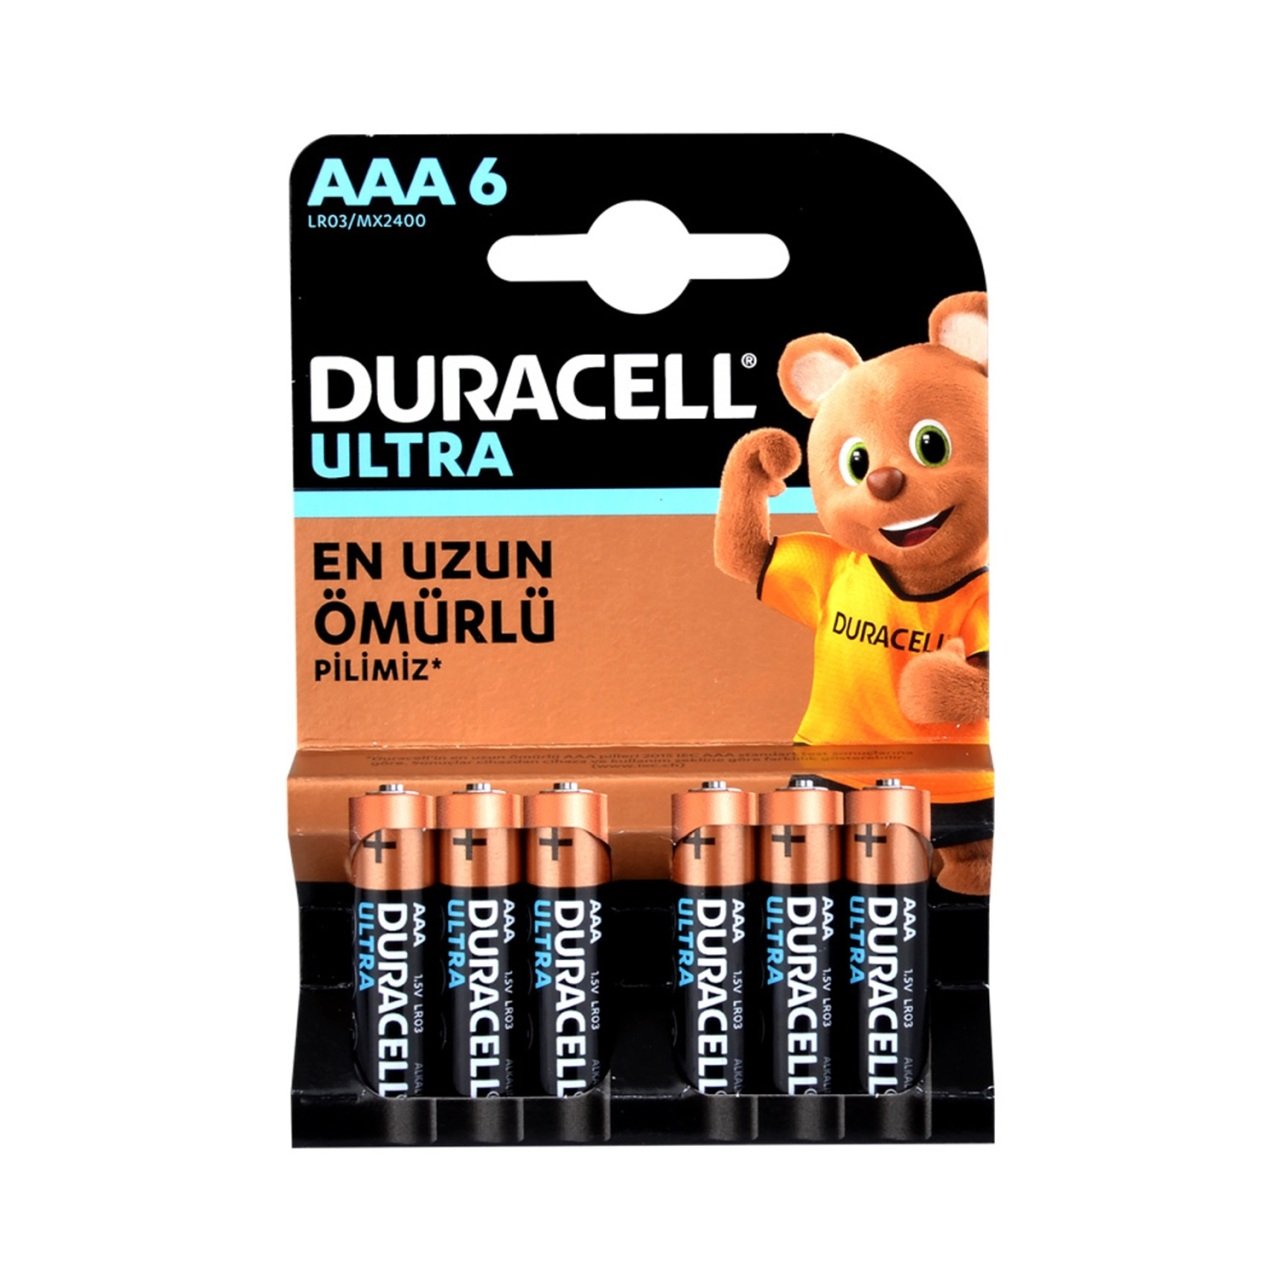 Duracell Alkalin AAA İnce Kalem Pil 6'lı Paket